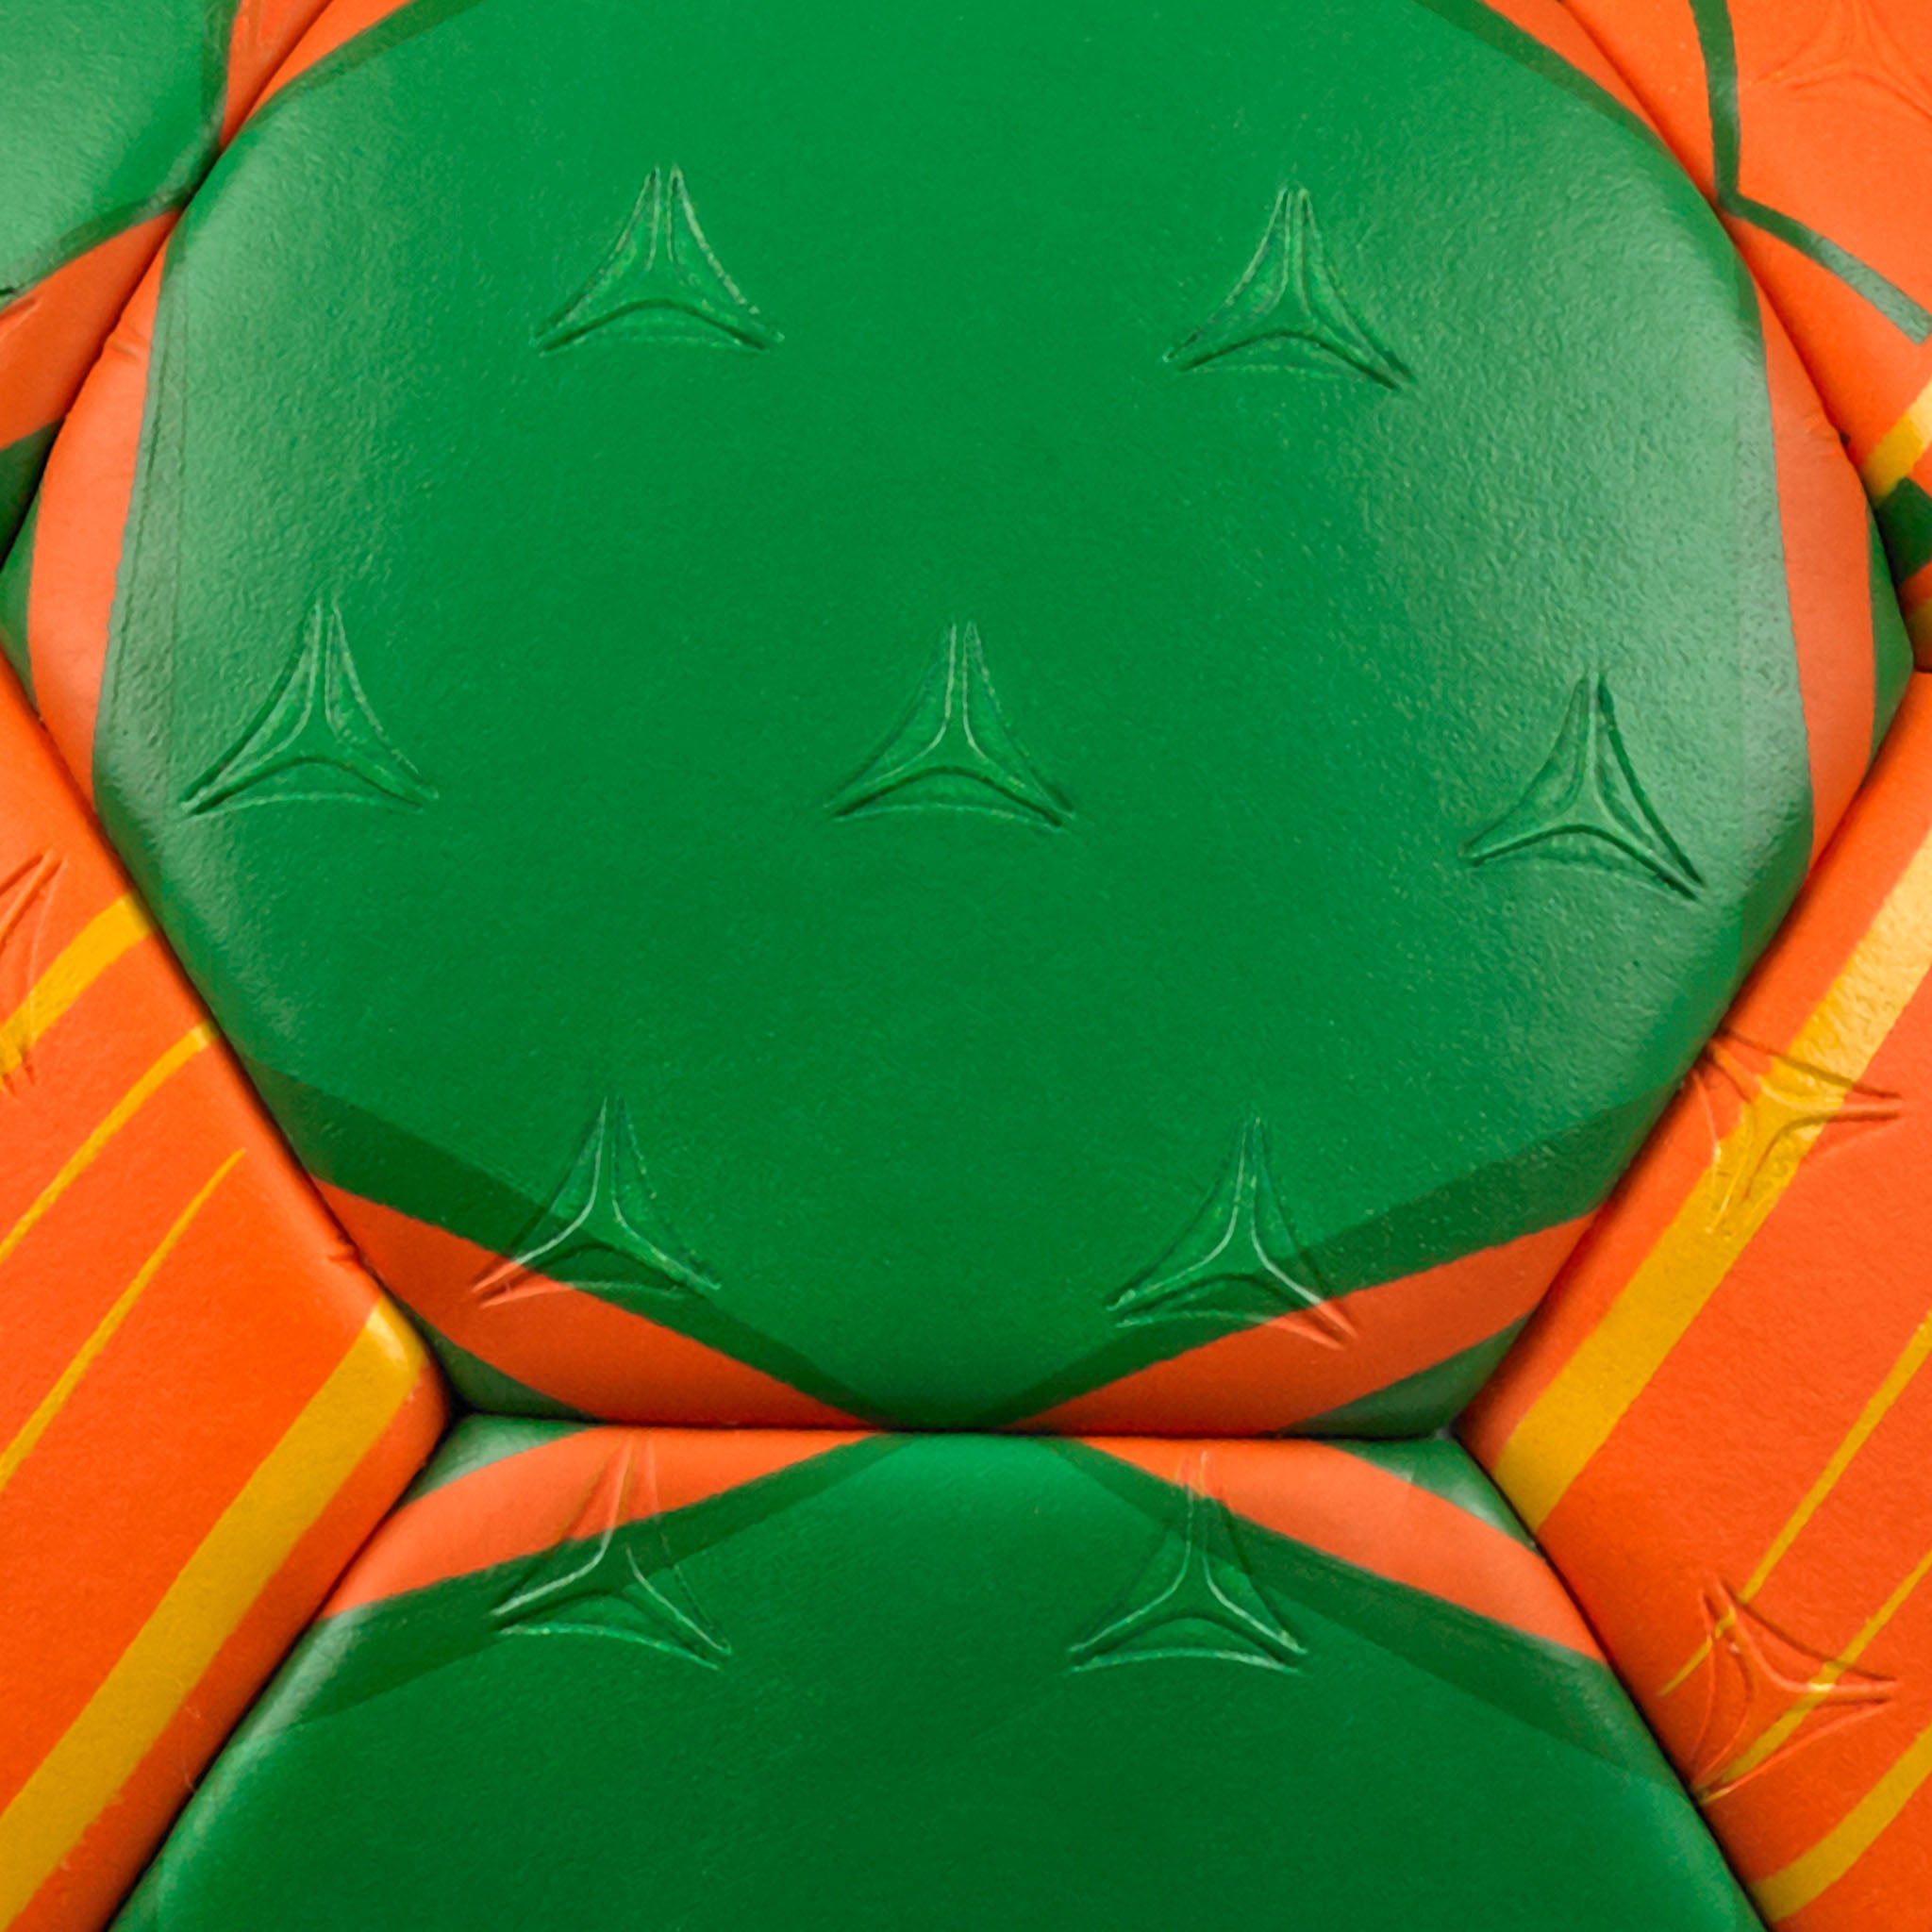 Handball - Force DB #colour_green/orange